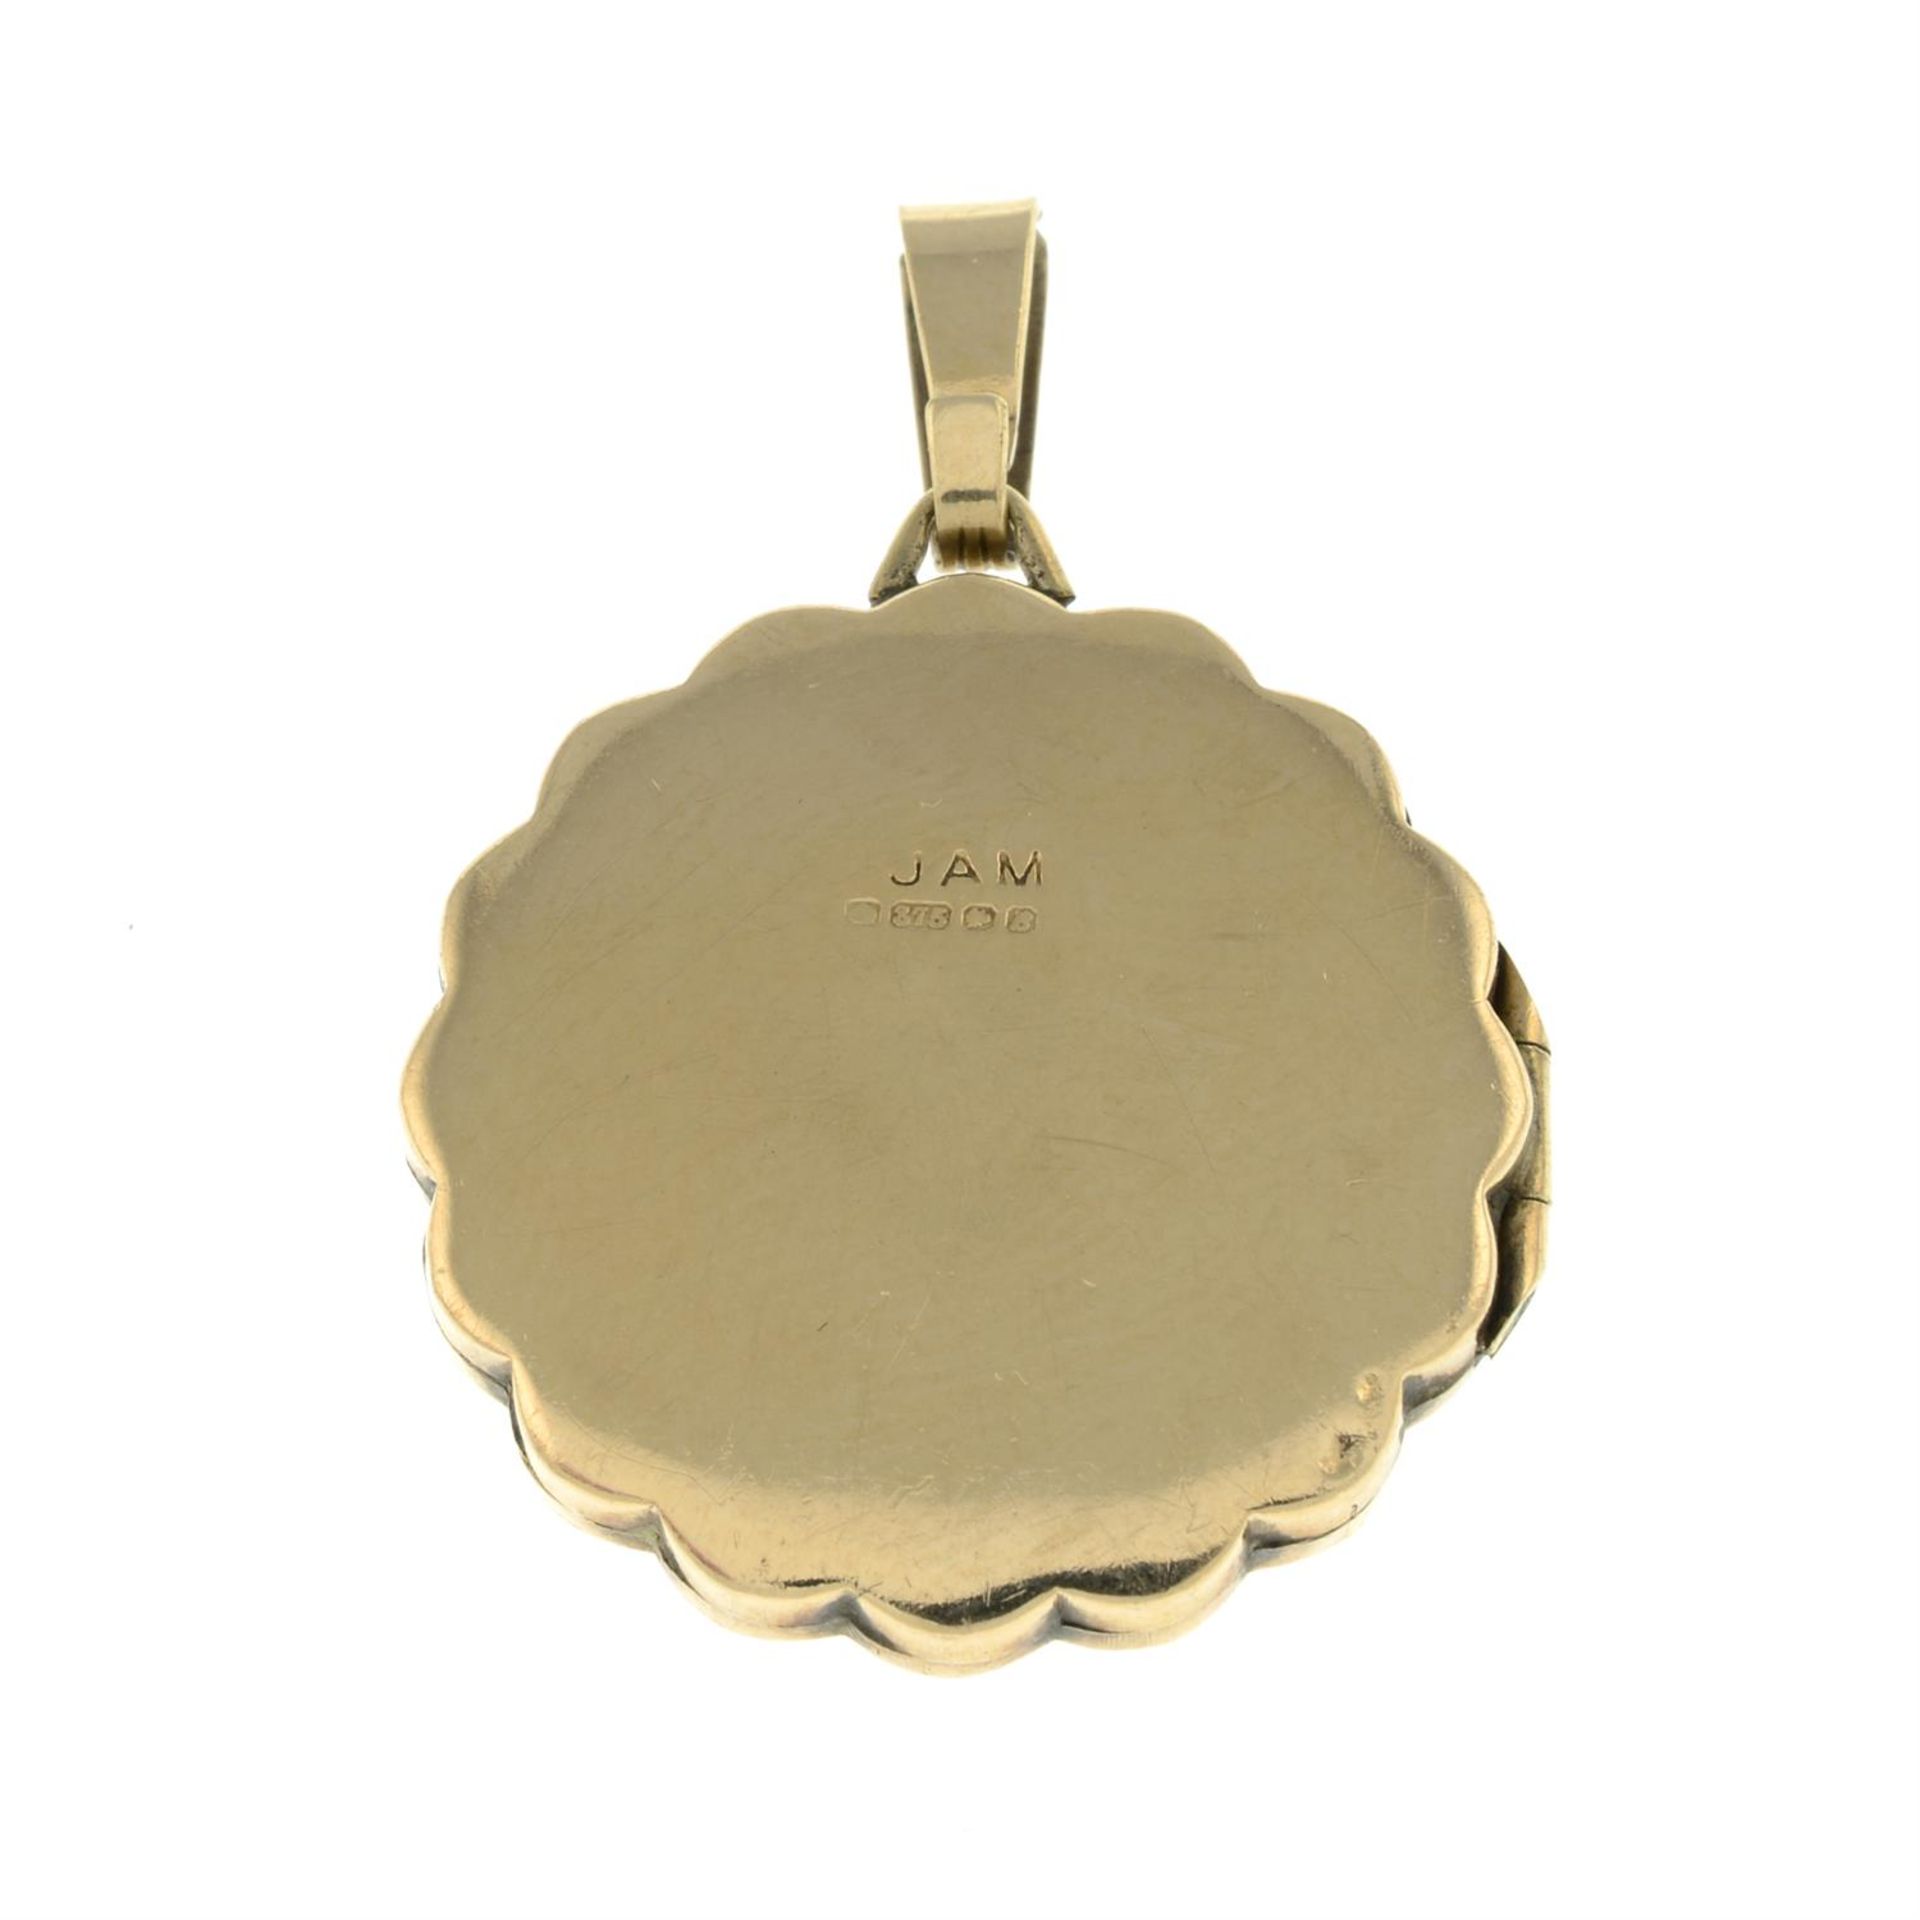 9ct gold locket pendant - Image 2 of 2